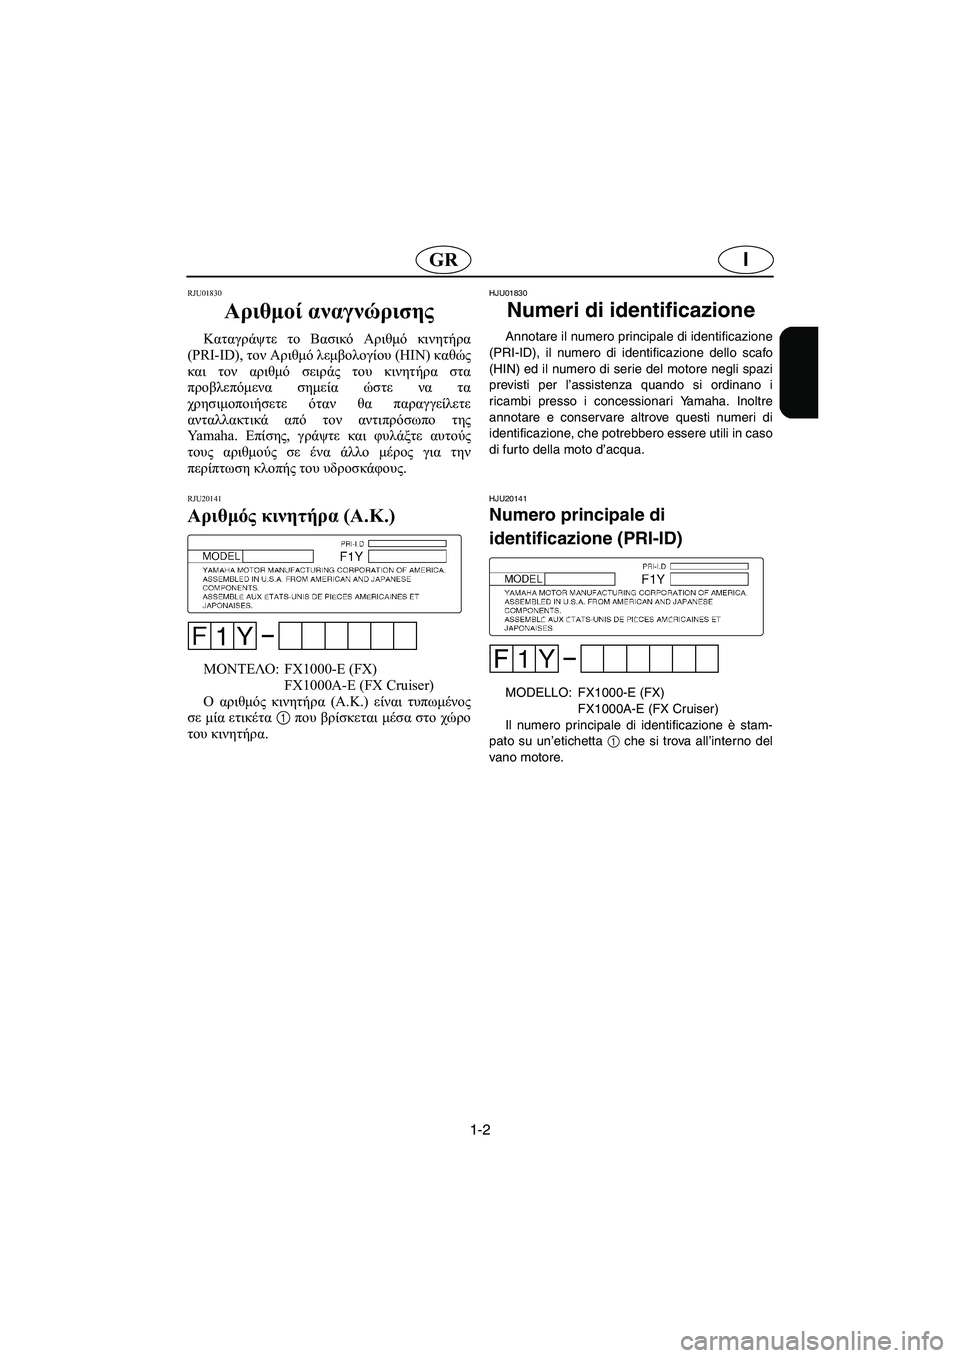 YAMAHA FX CRUISER 2006  Manuale duso (in Italian) 1-2
IGR
RJU01830 
Αριθμοί αναγνώρισης  
Καταγράψτε το Βασικό Αριθμό κινητήρα
(PRI-ID), τον Αριθμό λεμβολογίου (HIN) καθώς
κ�